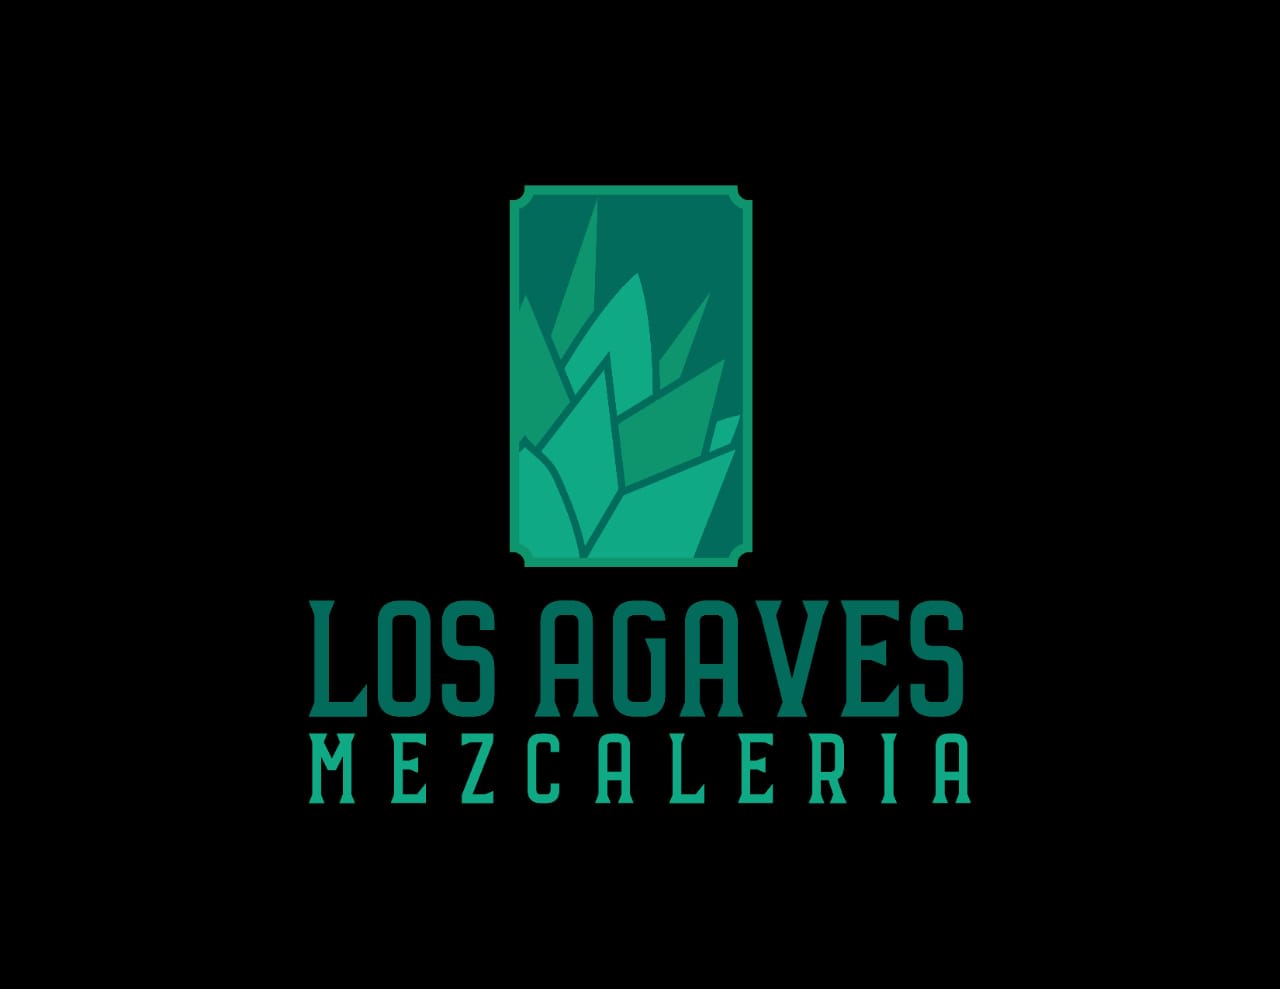 Mezcaleria Los Agaves